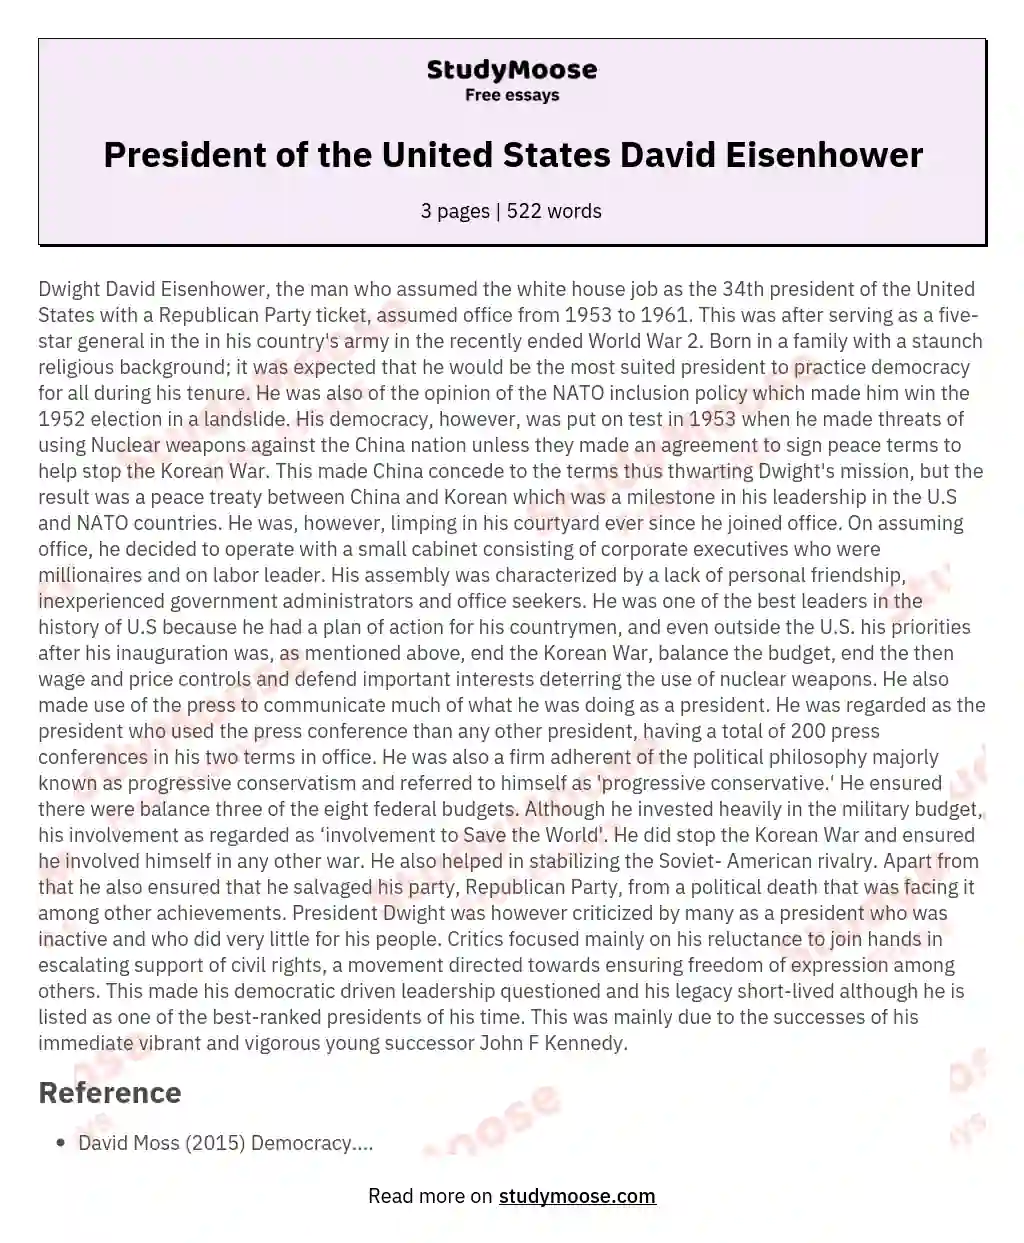 President of the United States David Eisenhower essay